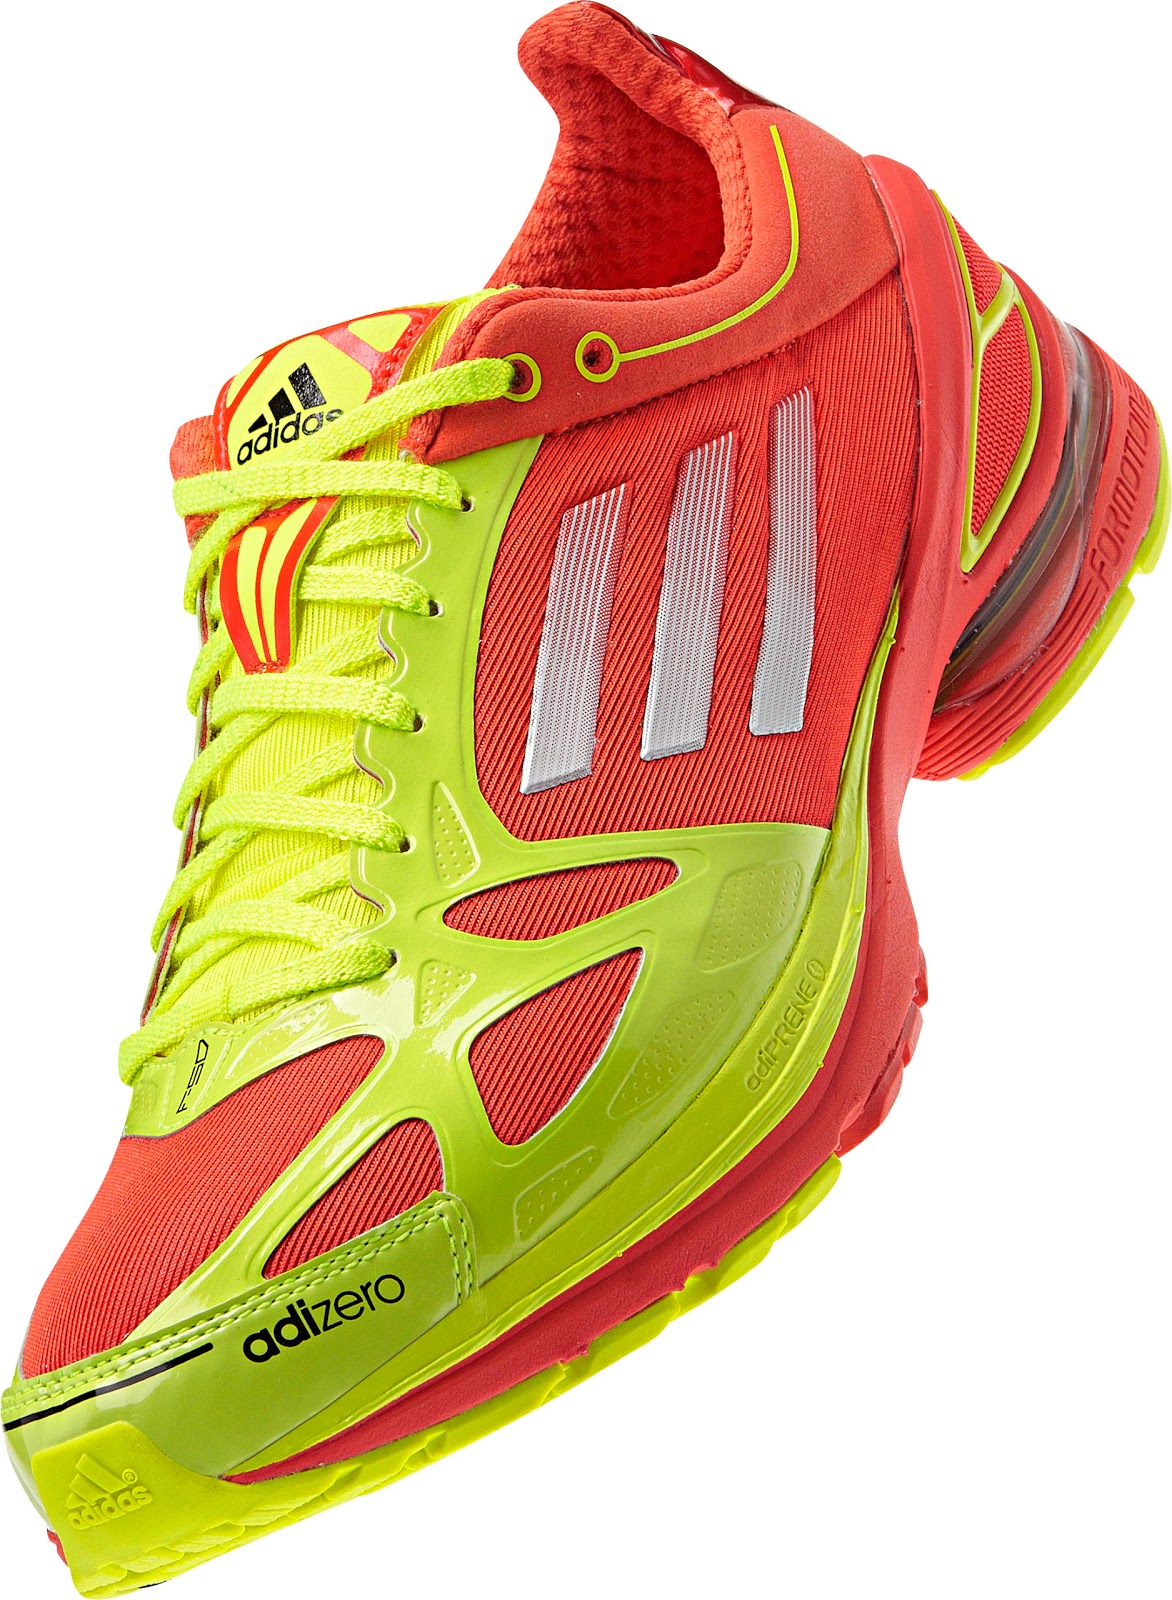 adizero f50 running shoes